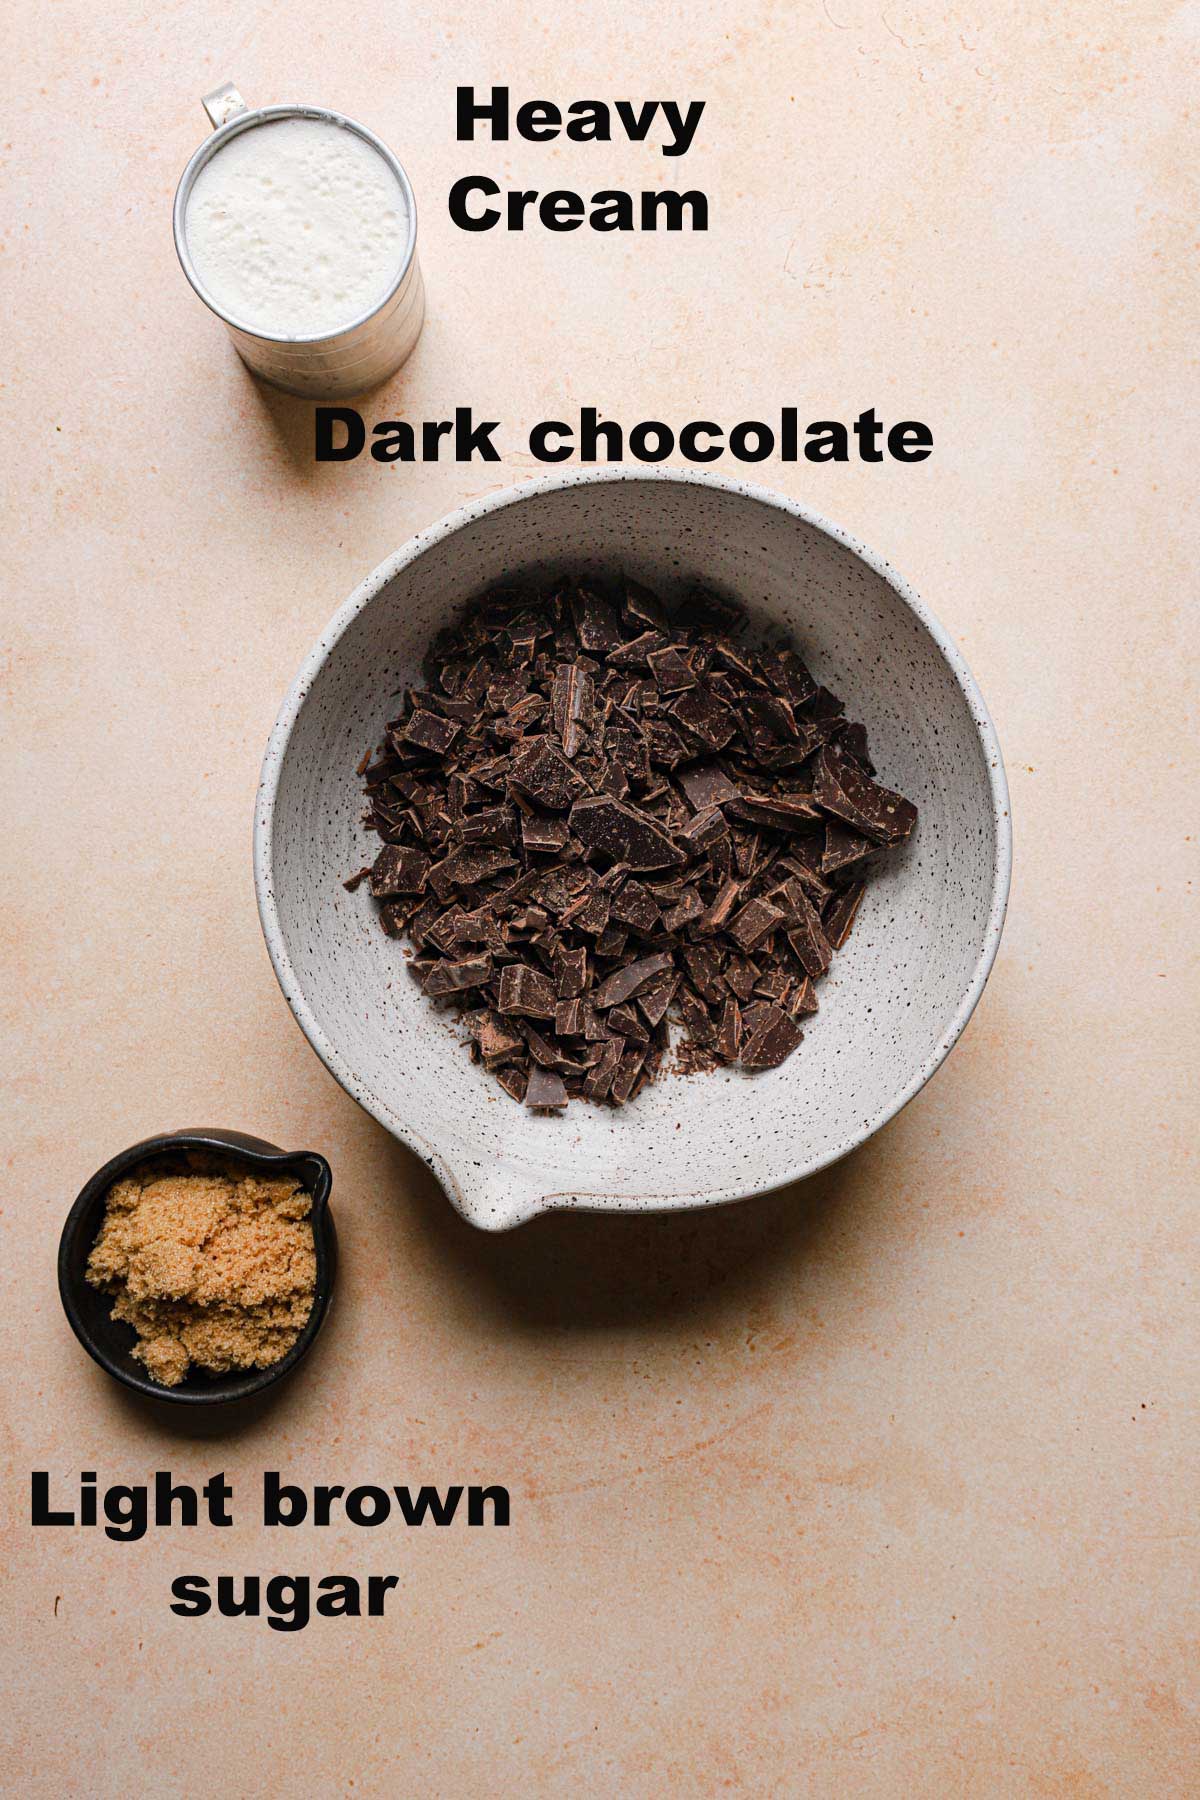 Ingredients to make chocolate ganache